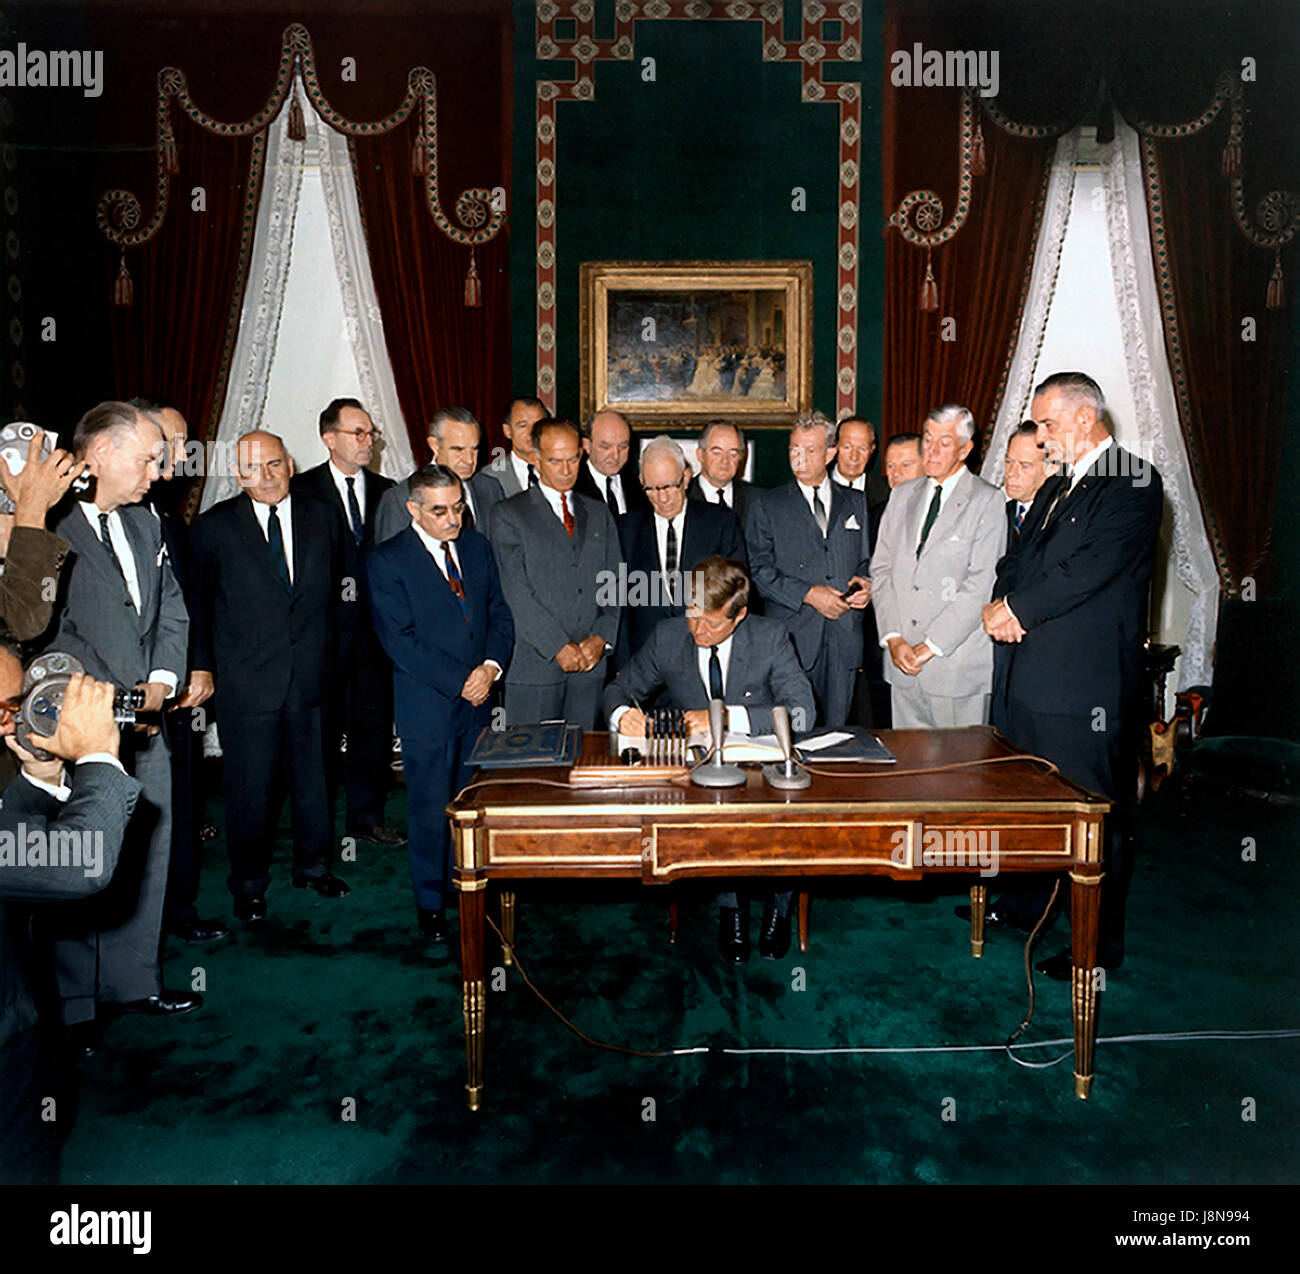 United States President John F. Kennedy signs the Limited Nuclear Test Ban Treaty in the White House Treaty Room on October 7, 1963. From left to right: William Hopkins, U.S. Senator Mike Mansfield (Democrat of Montana), John J. McCloy, Adrian S. Fisher, U.S. Senator John Pastore (Democrat of Rhode Island), W. Averell Harriman, U.S. Senator George Smathers (Democrat of Florida), U.S. Senator J.W. Fulbright (Democrat of Arkansas), U.S. Secretary of State Dean Rusk,  U.S. Senator George Aiken (Republican of Vermont), President Kennedy, U.S. Senator Hubert H. Humphrey (Democrat of Minnesota),  U. Stock Photo